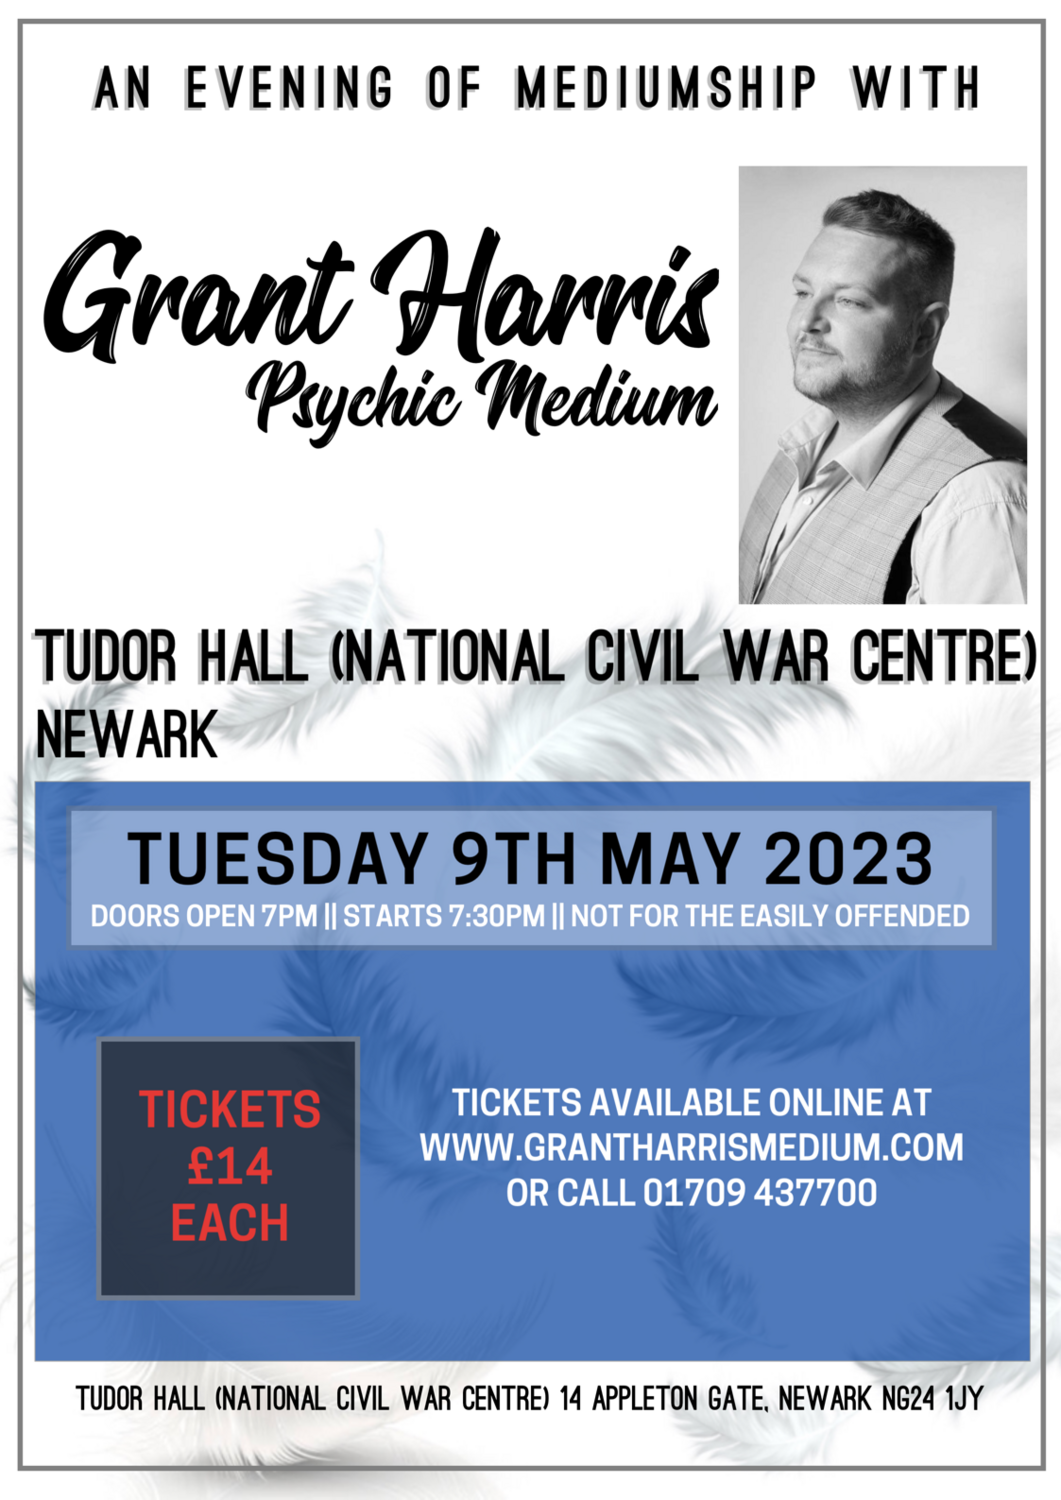 Tudor Hall (National Civil War Centre) Newark, Tuesday 9th May 2023